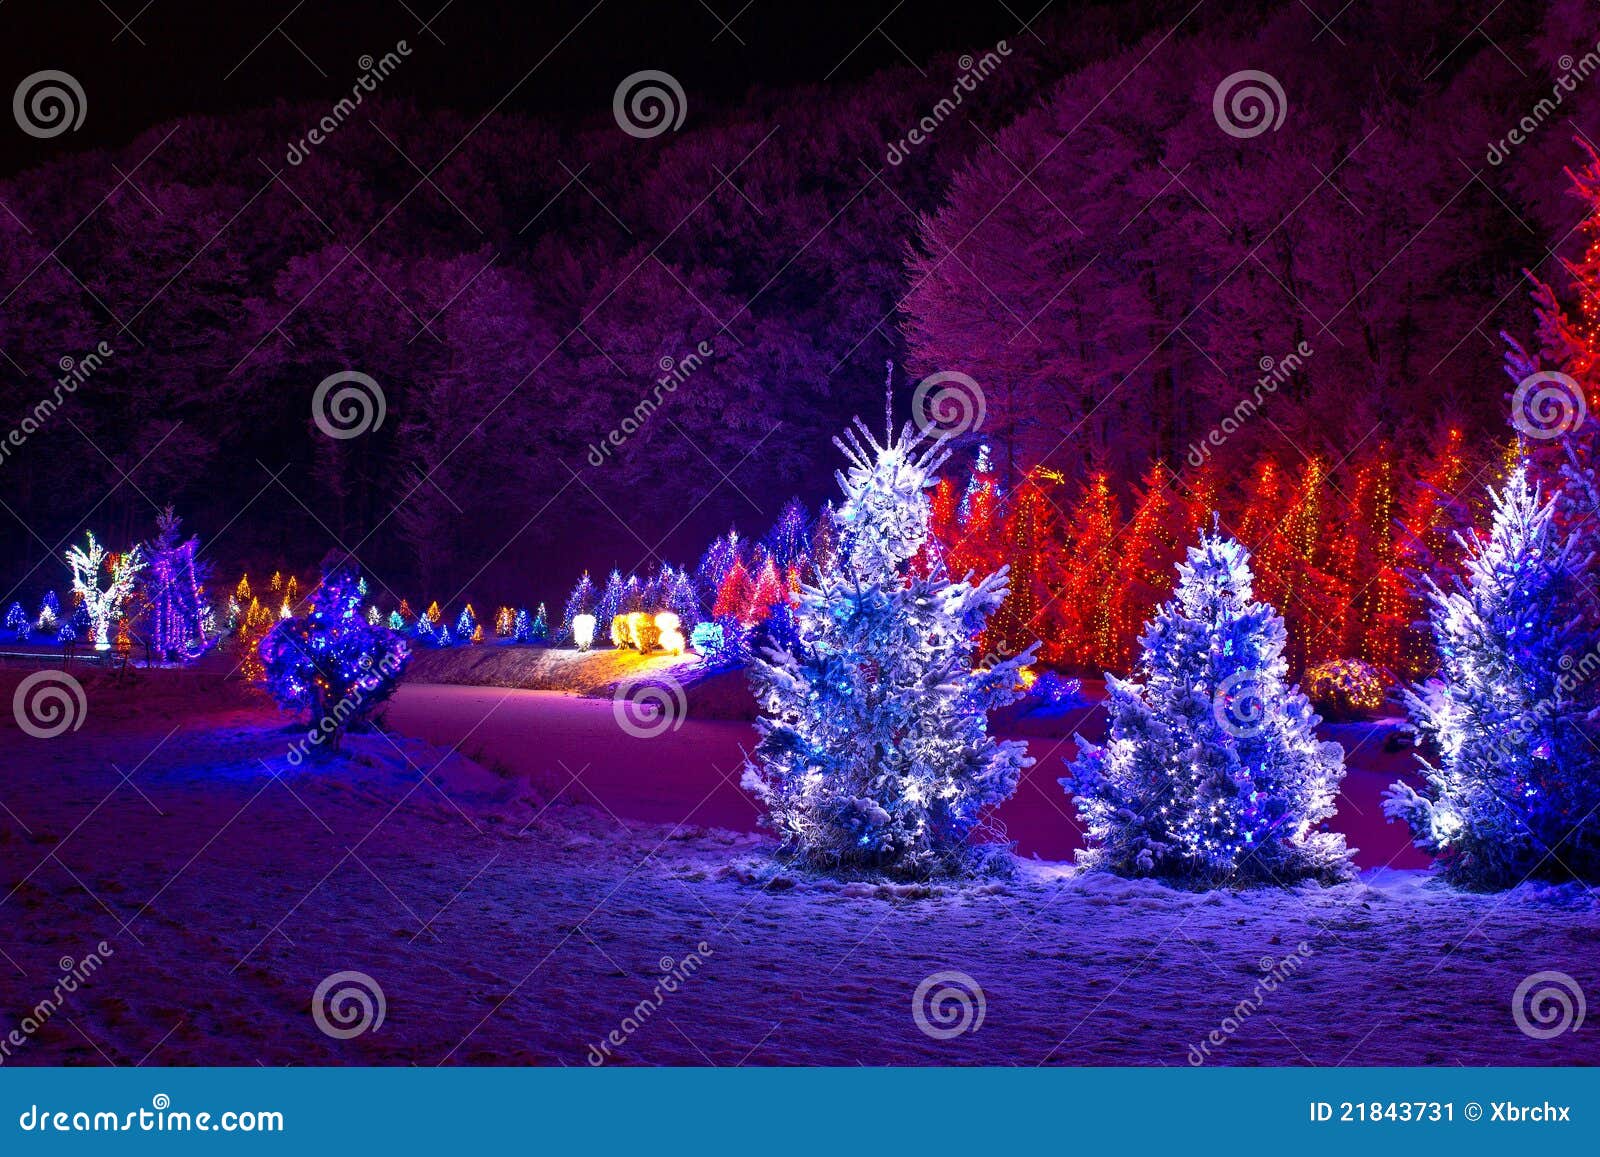 christmas fantasy - pine trees in x-mas lights